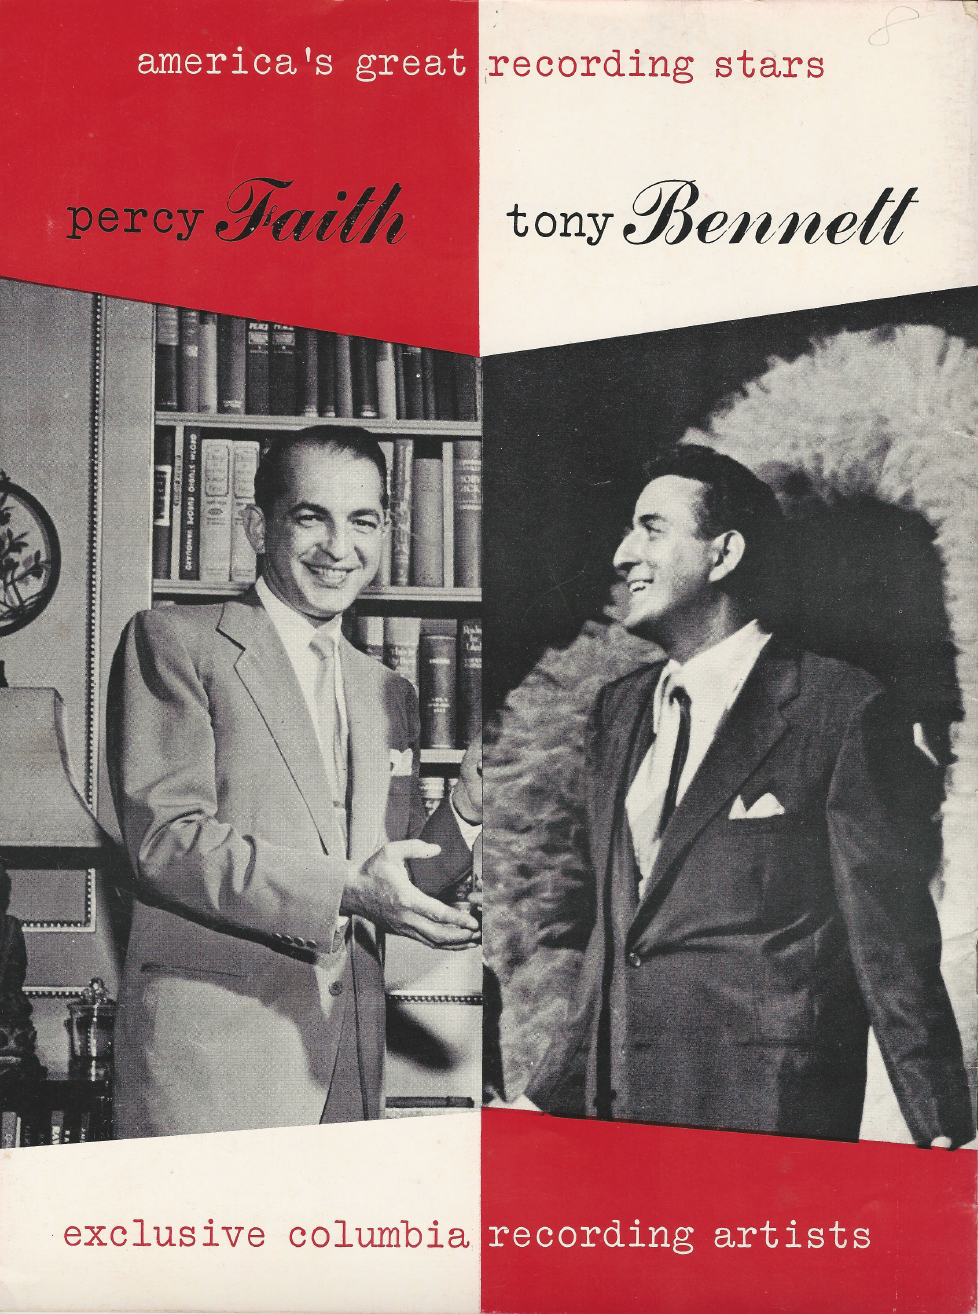 Percy Faith & Tony Bennett concert program